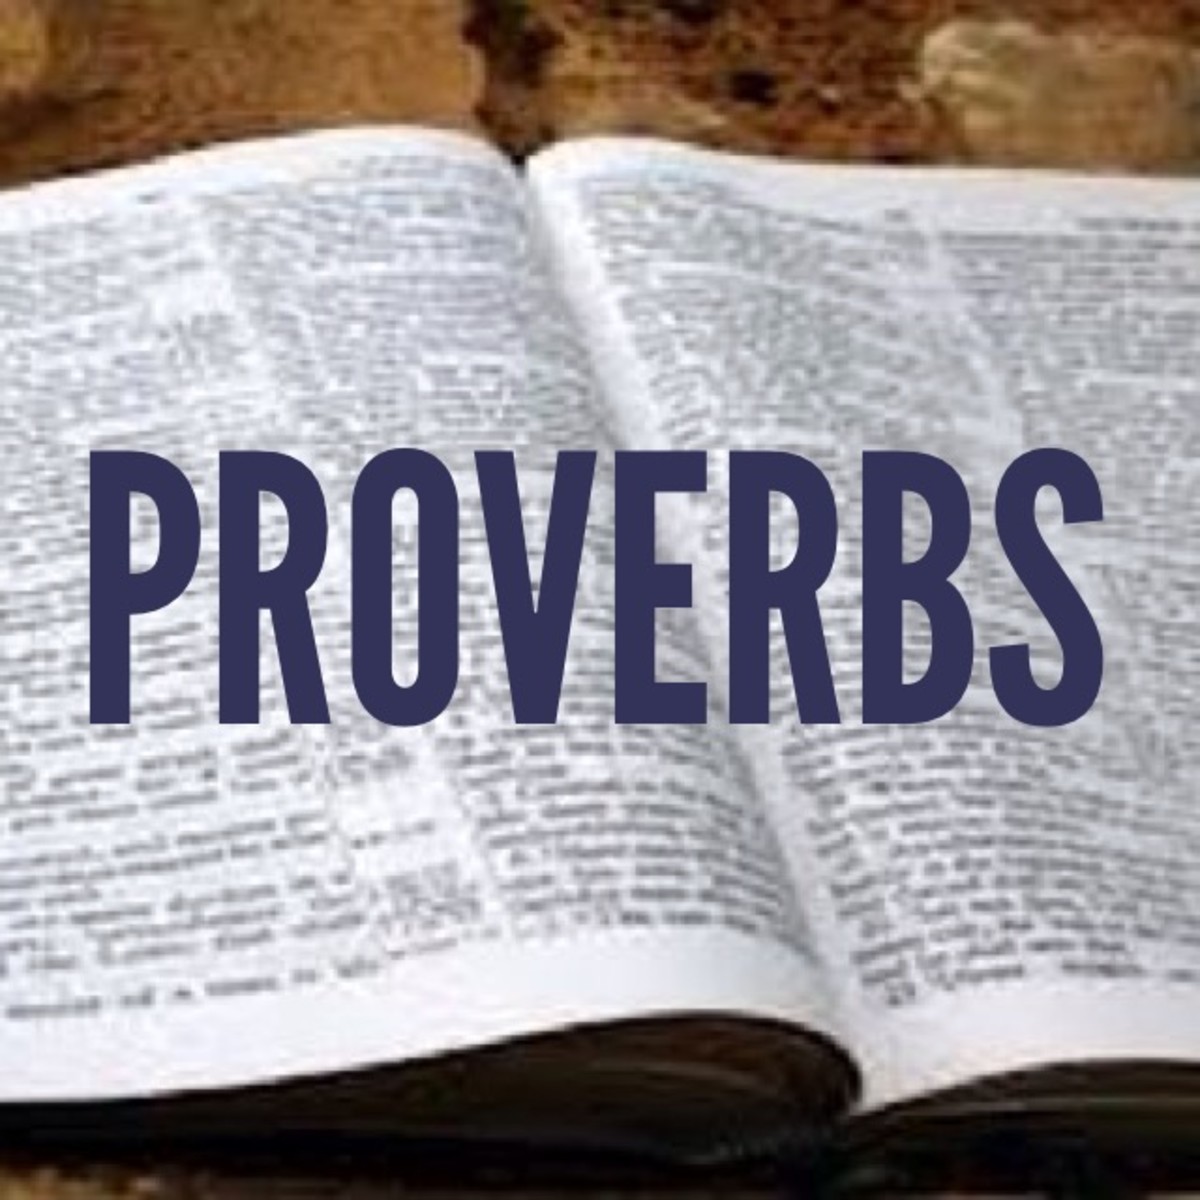 psalms-vs-proverbs